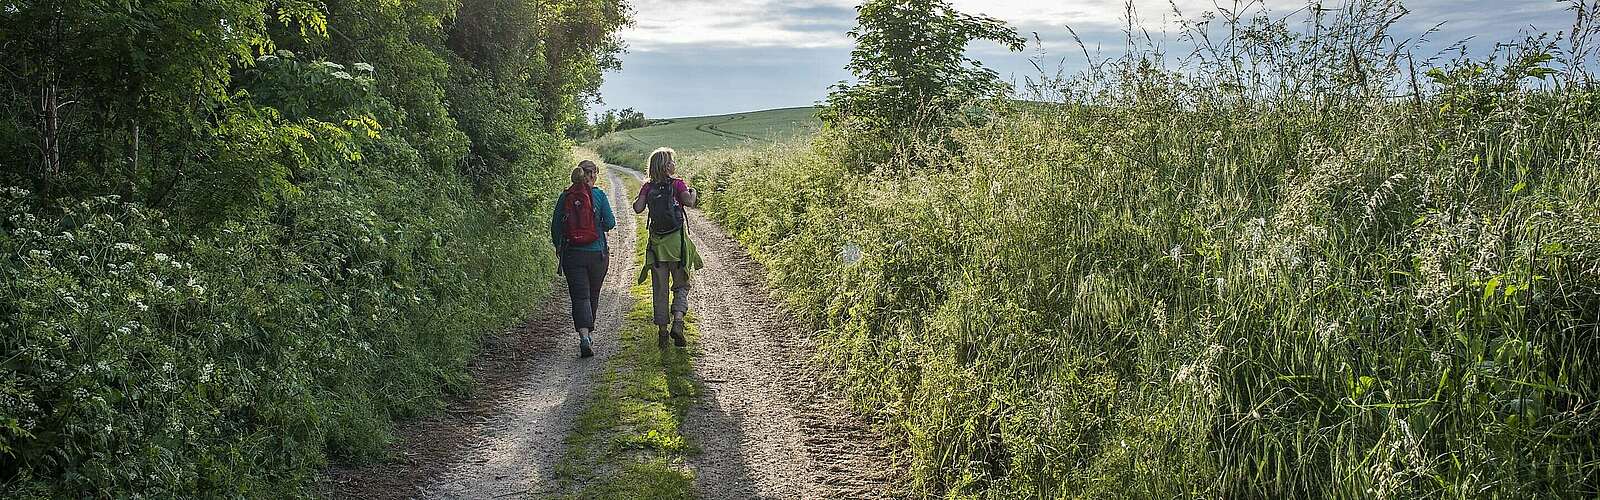 Zwei Wanderer auf einem Feldweg,
        
    

        Foto: Fotograf / Lizenz - Media Import/Klaus-Peter Kappest